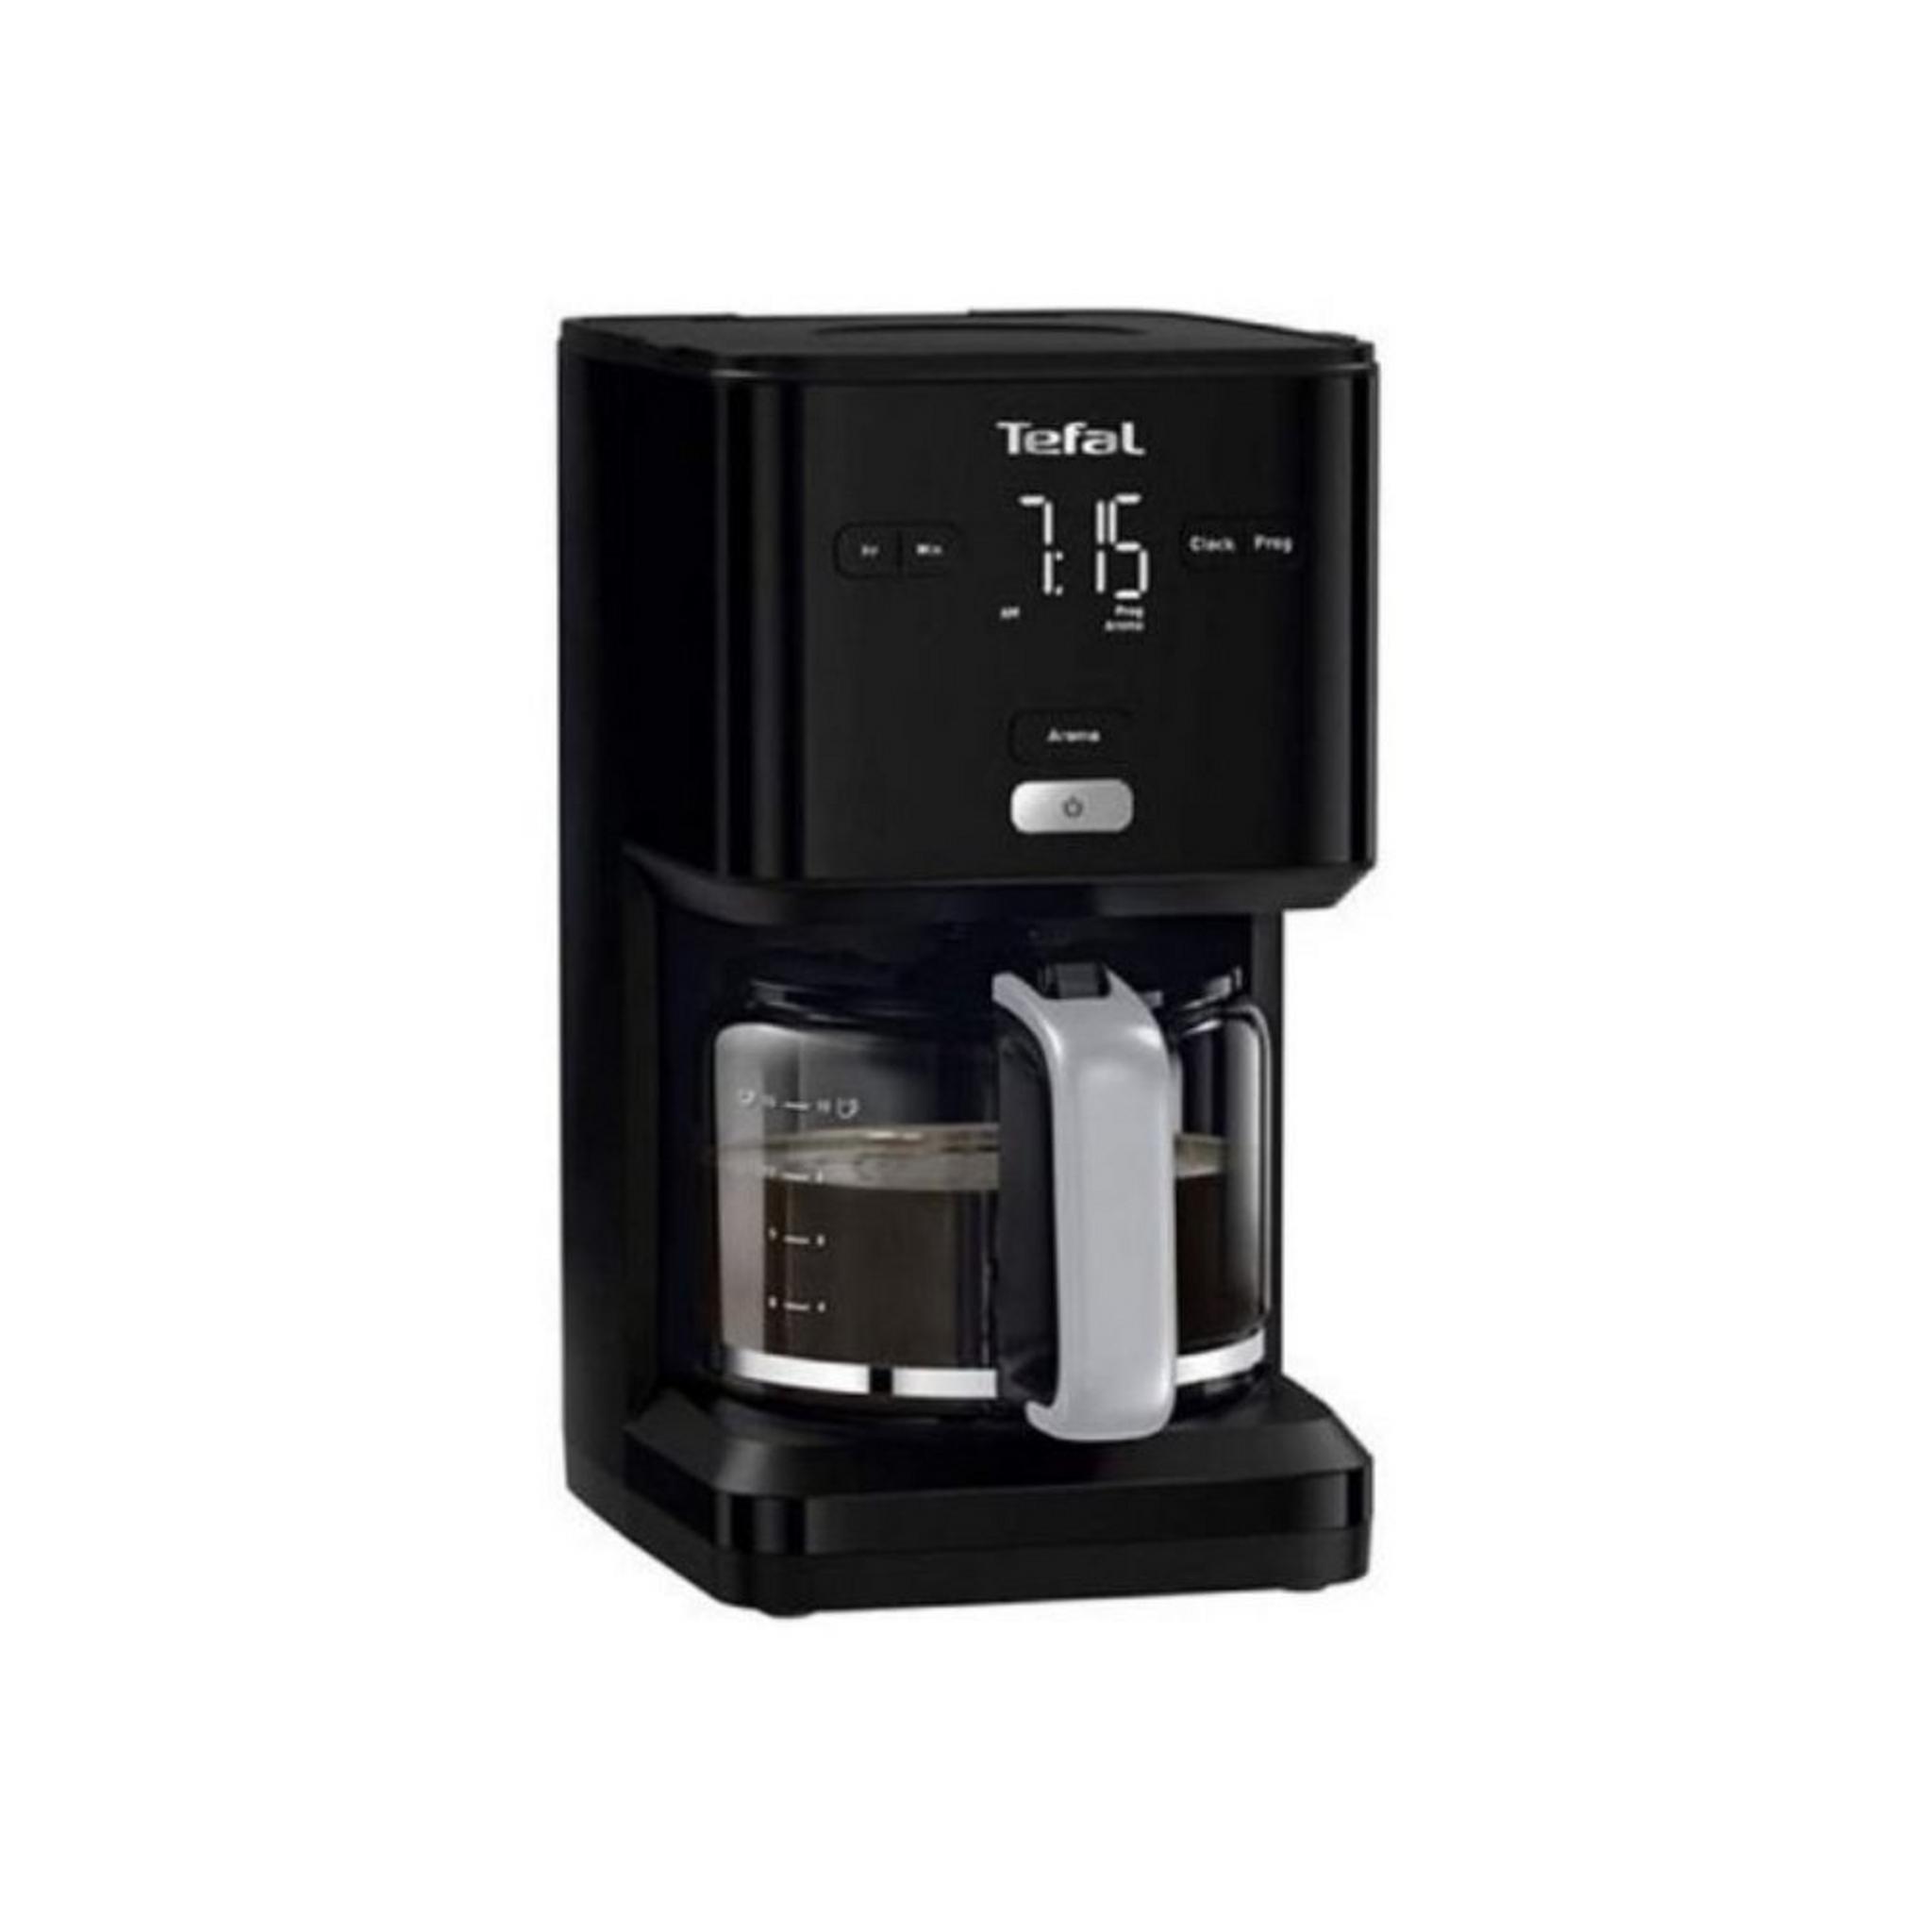 Tefal Smart'n Light Coffee Maker Machine, CM600840 - Black